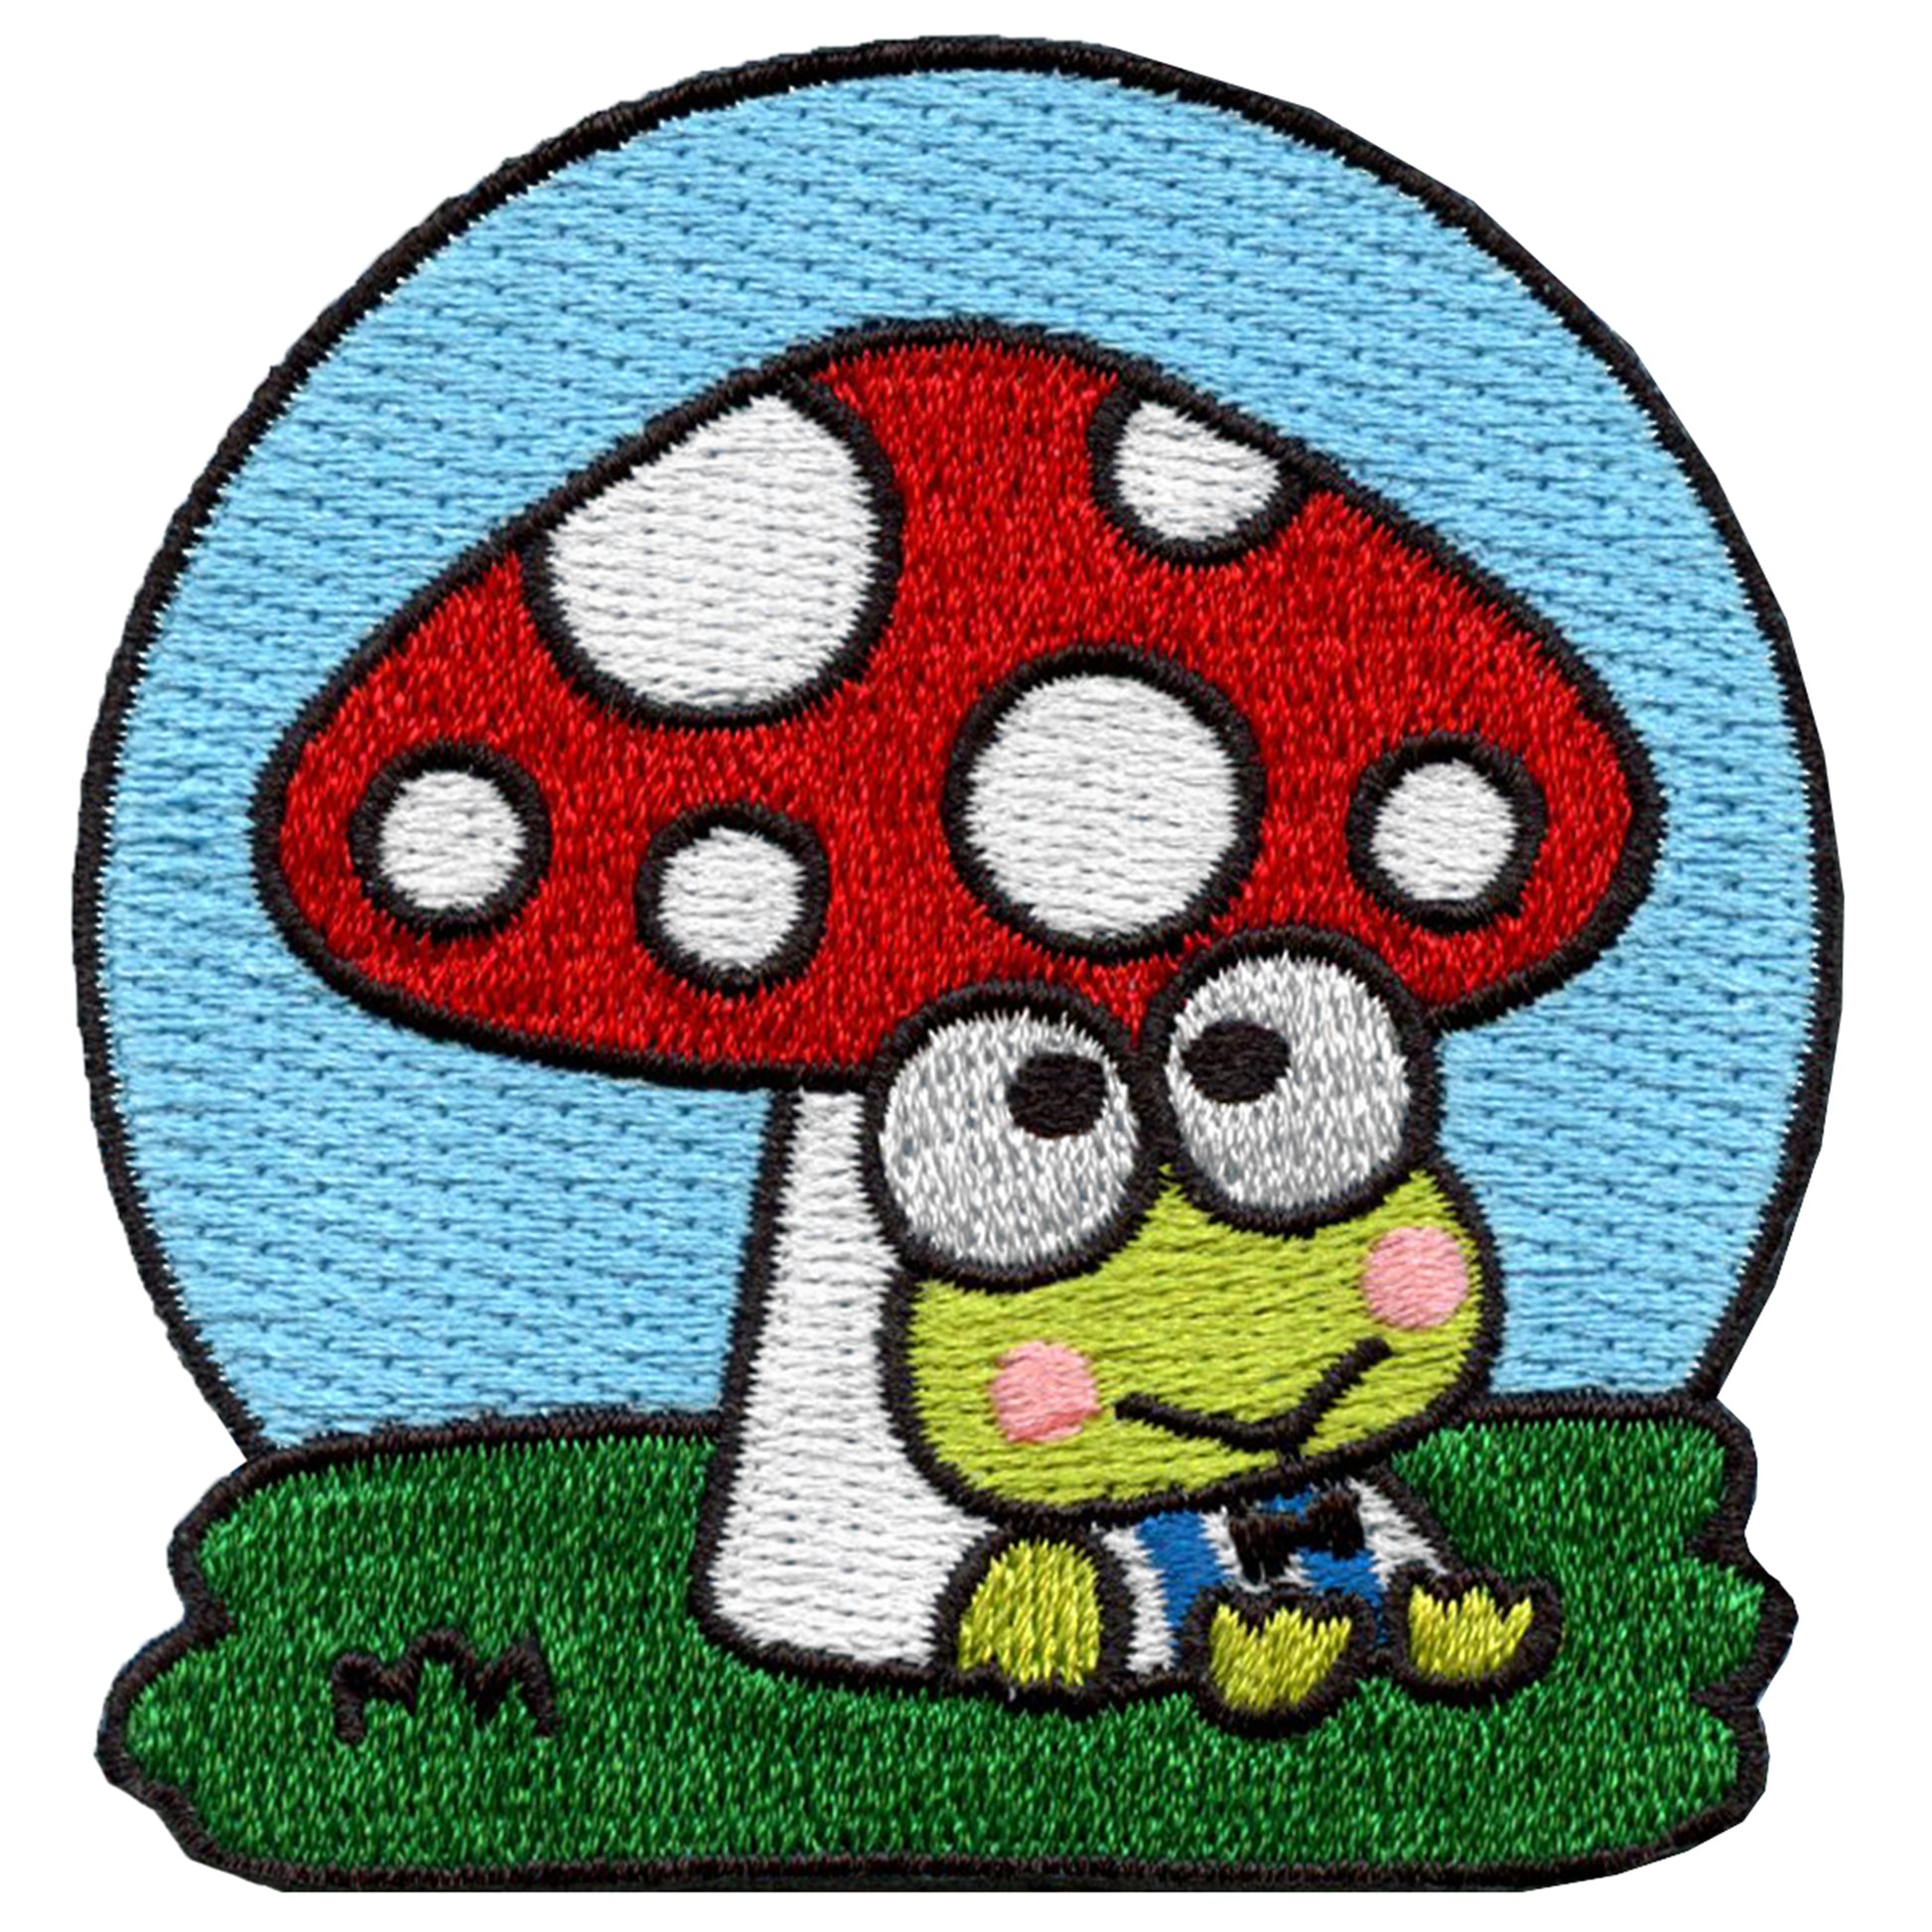 Keroppi Sitting Under Mushroom Patch Hello Kitty Cartoon Embroidered Iron On